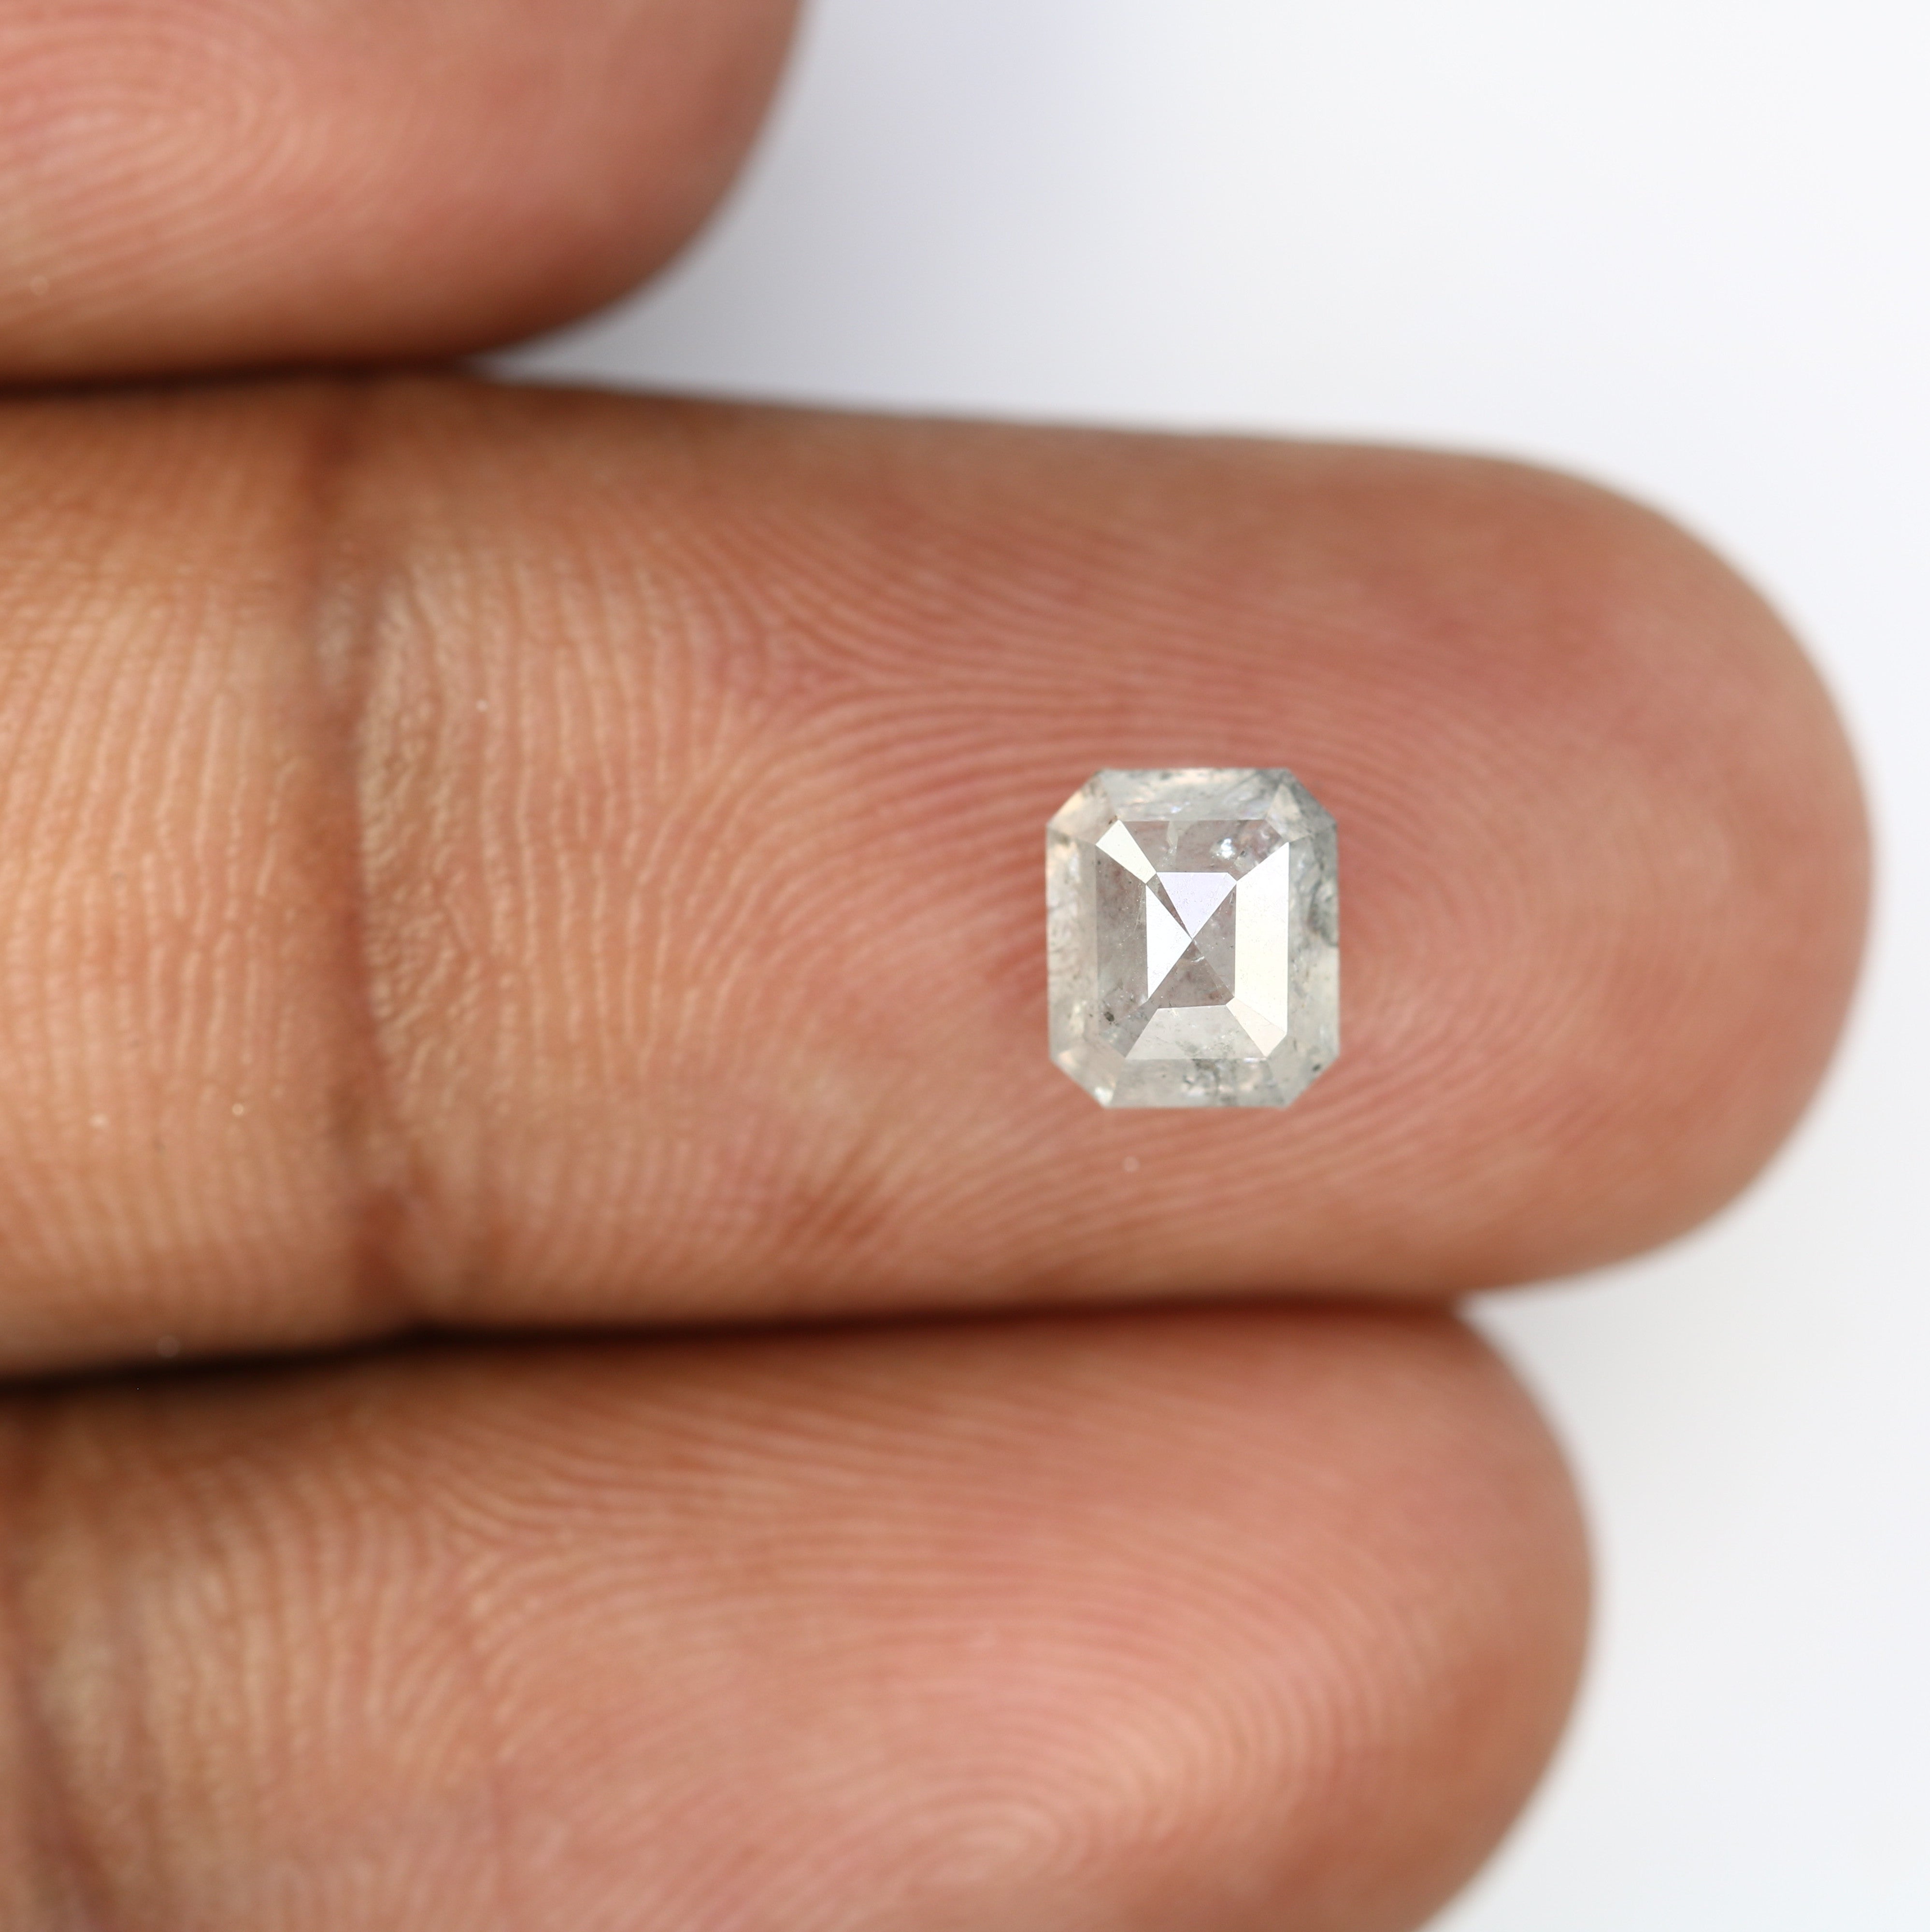 1.58 Carat Natural Salt And Pepper Emerald Cut Diamond For Wedding Ring